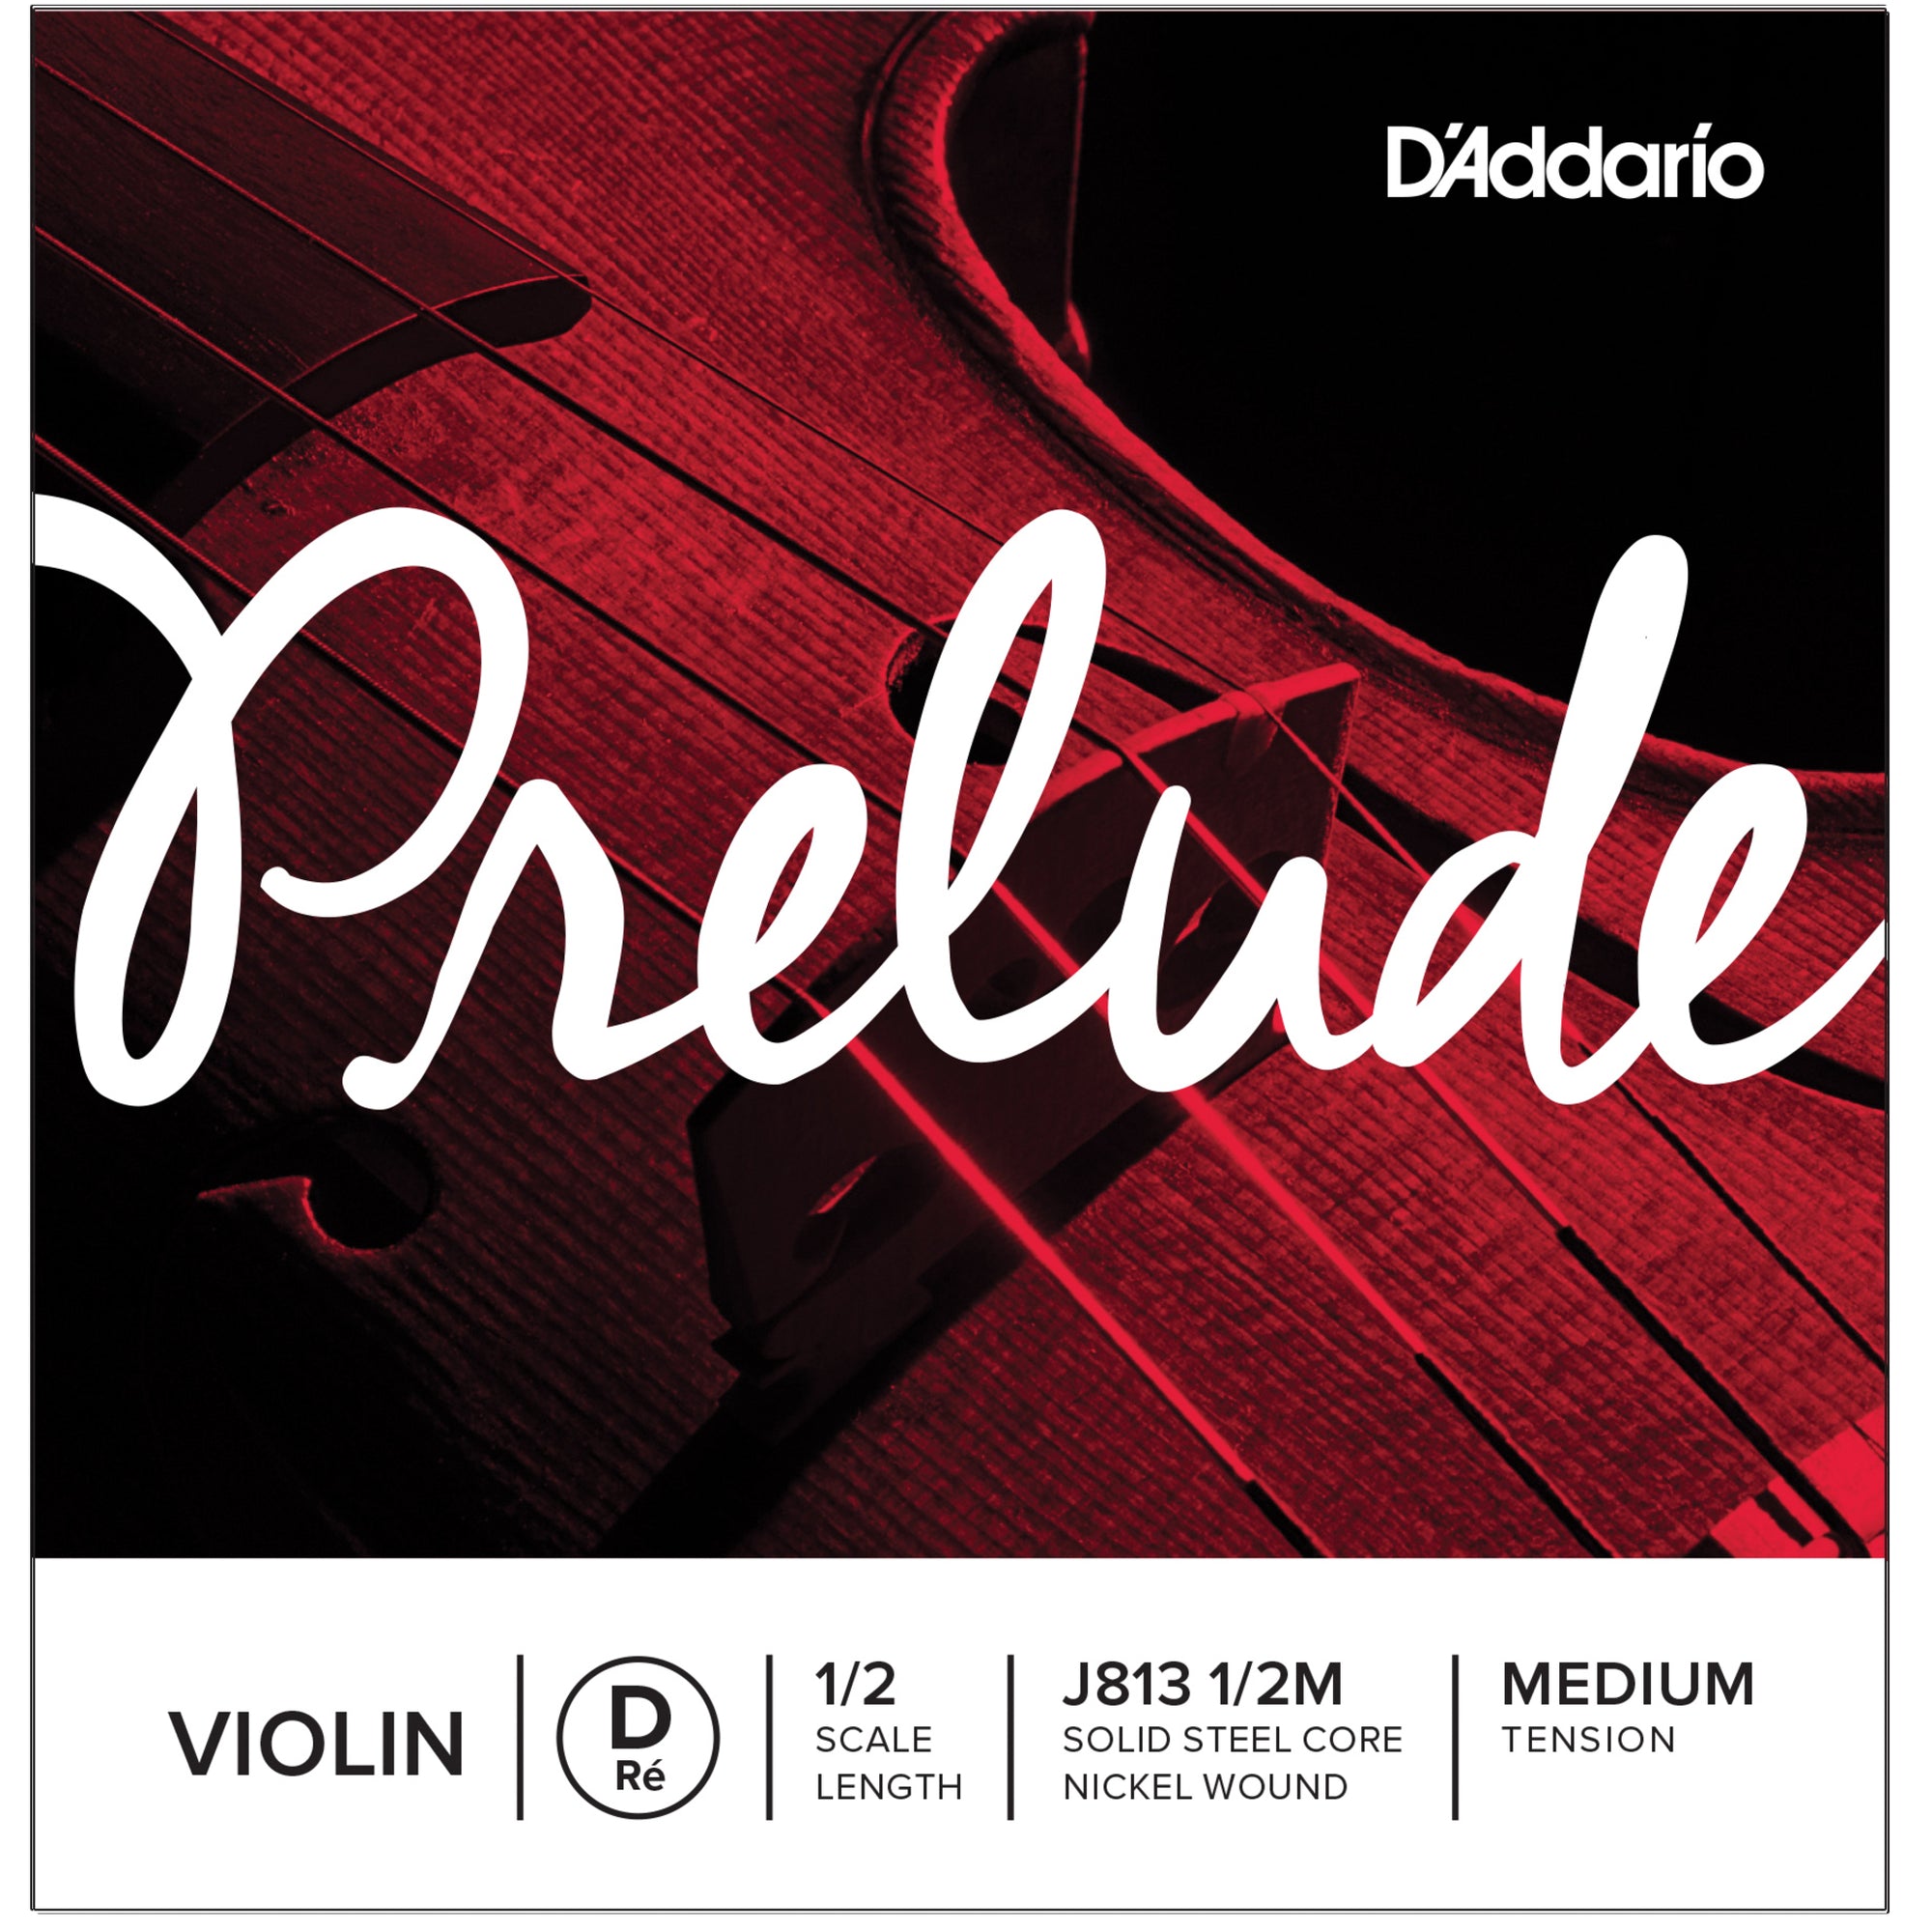 D'Addario J813 1/2M Prelude 1/2 D Violin Single String Medium J813